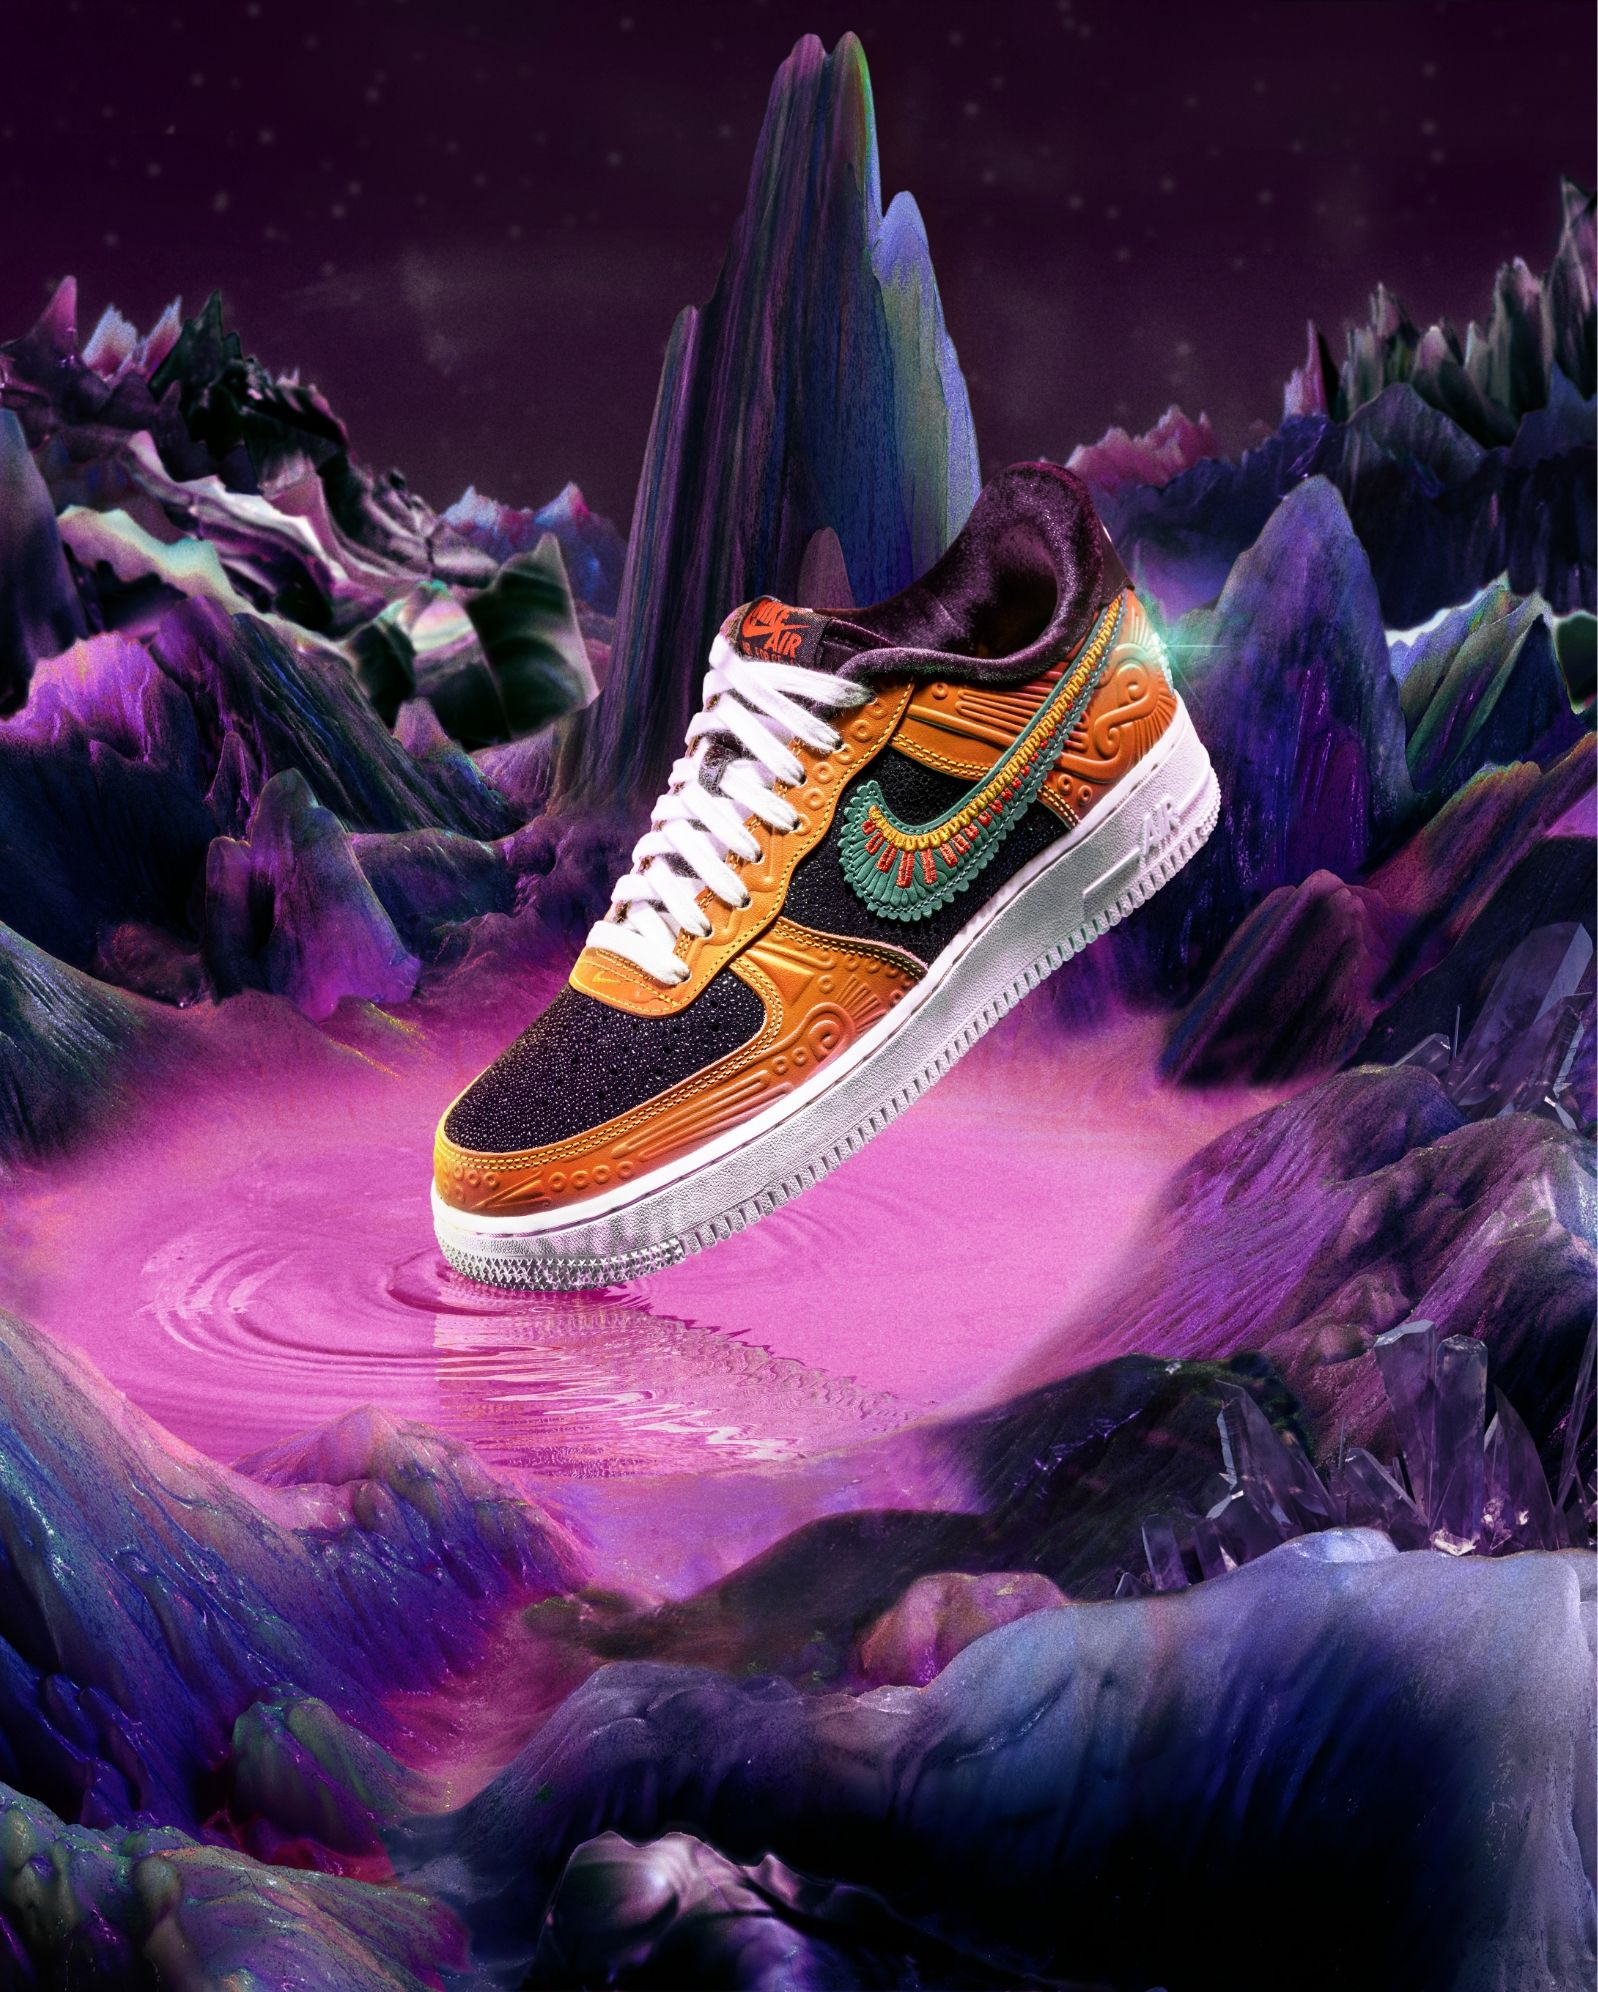 nike Día de muertos sneaker in 3d illustrated purple stalagmite environment. Toe of shoe dipping into pink liquid